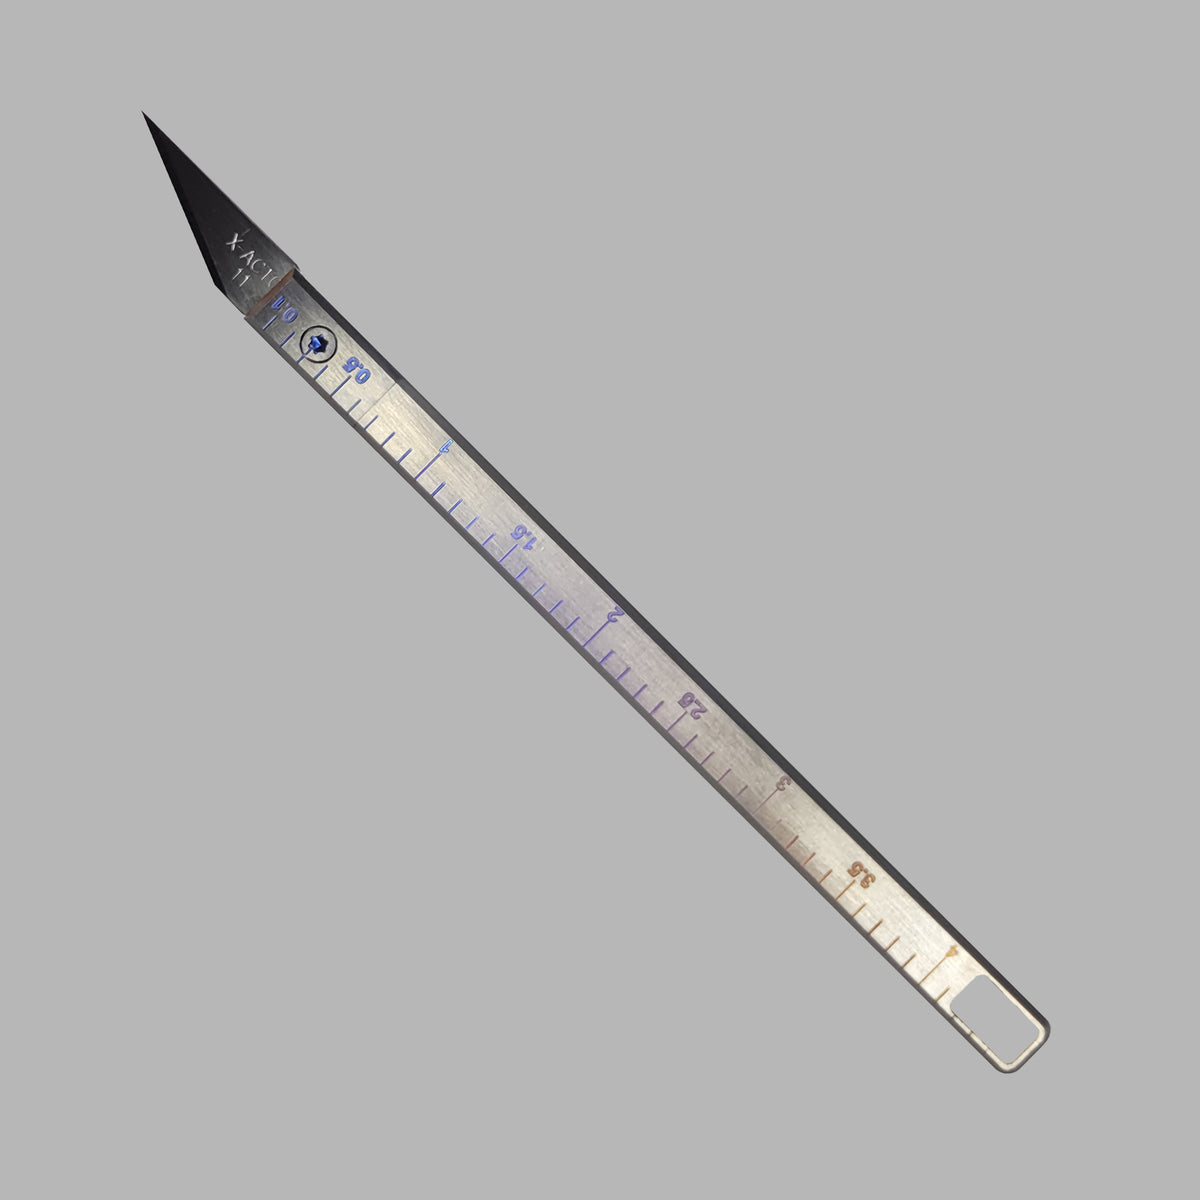 Titanium Xacto Knife by RetroCNC - Decent Modder V1